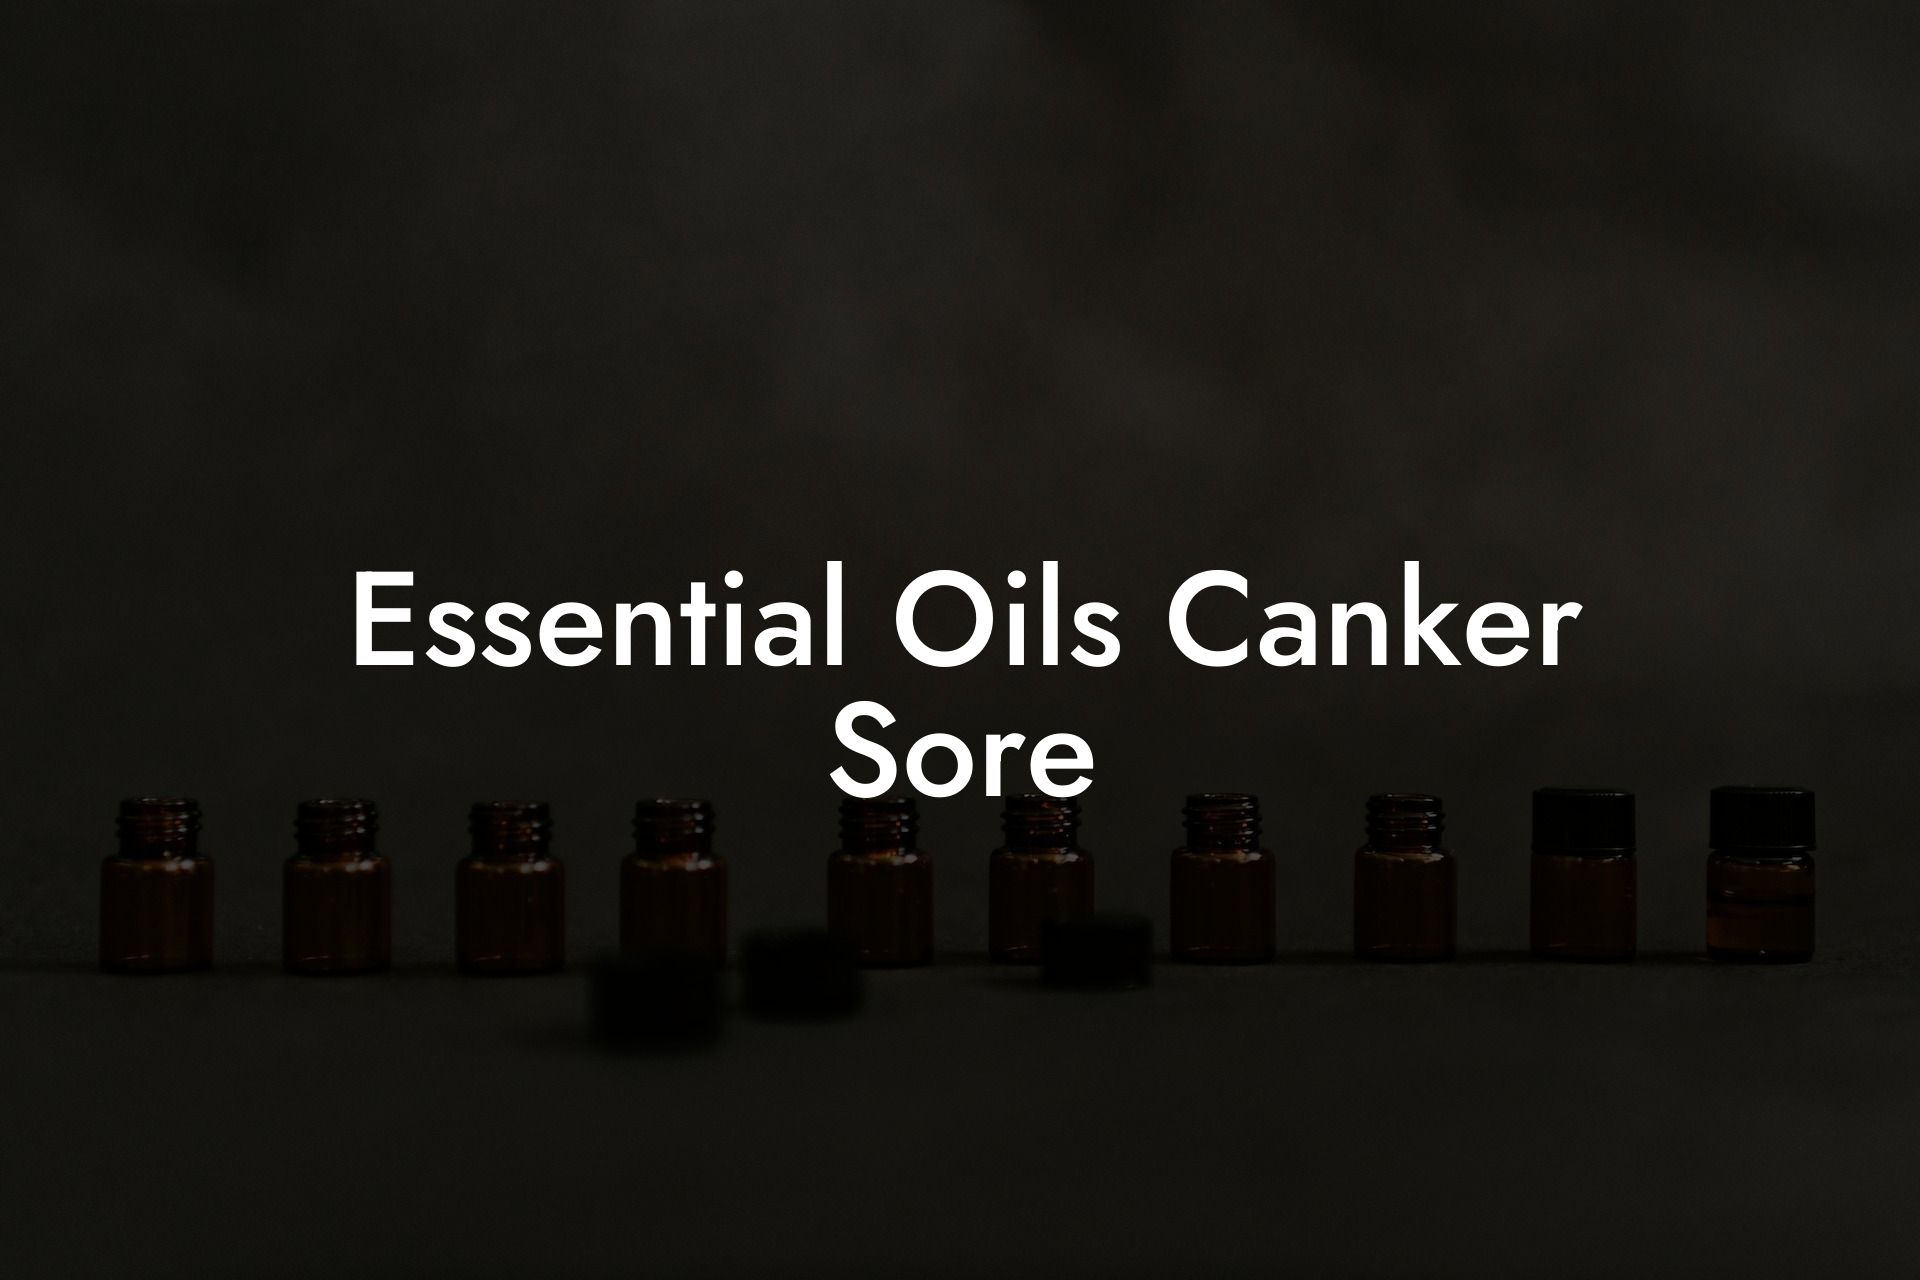 Essential Oils Canker Sore